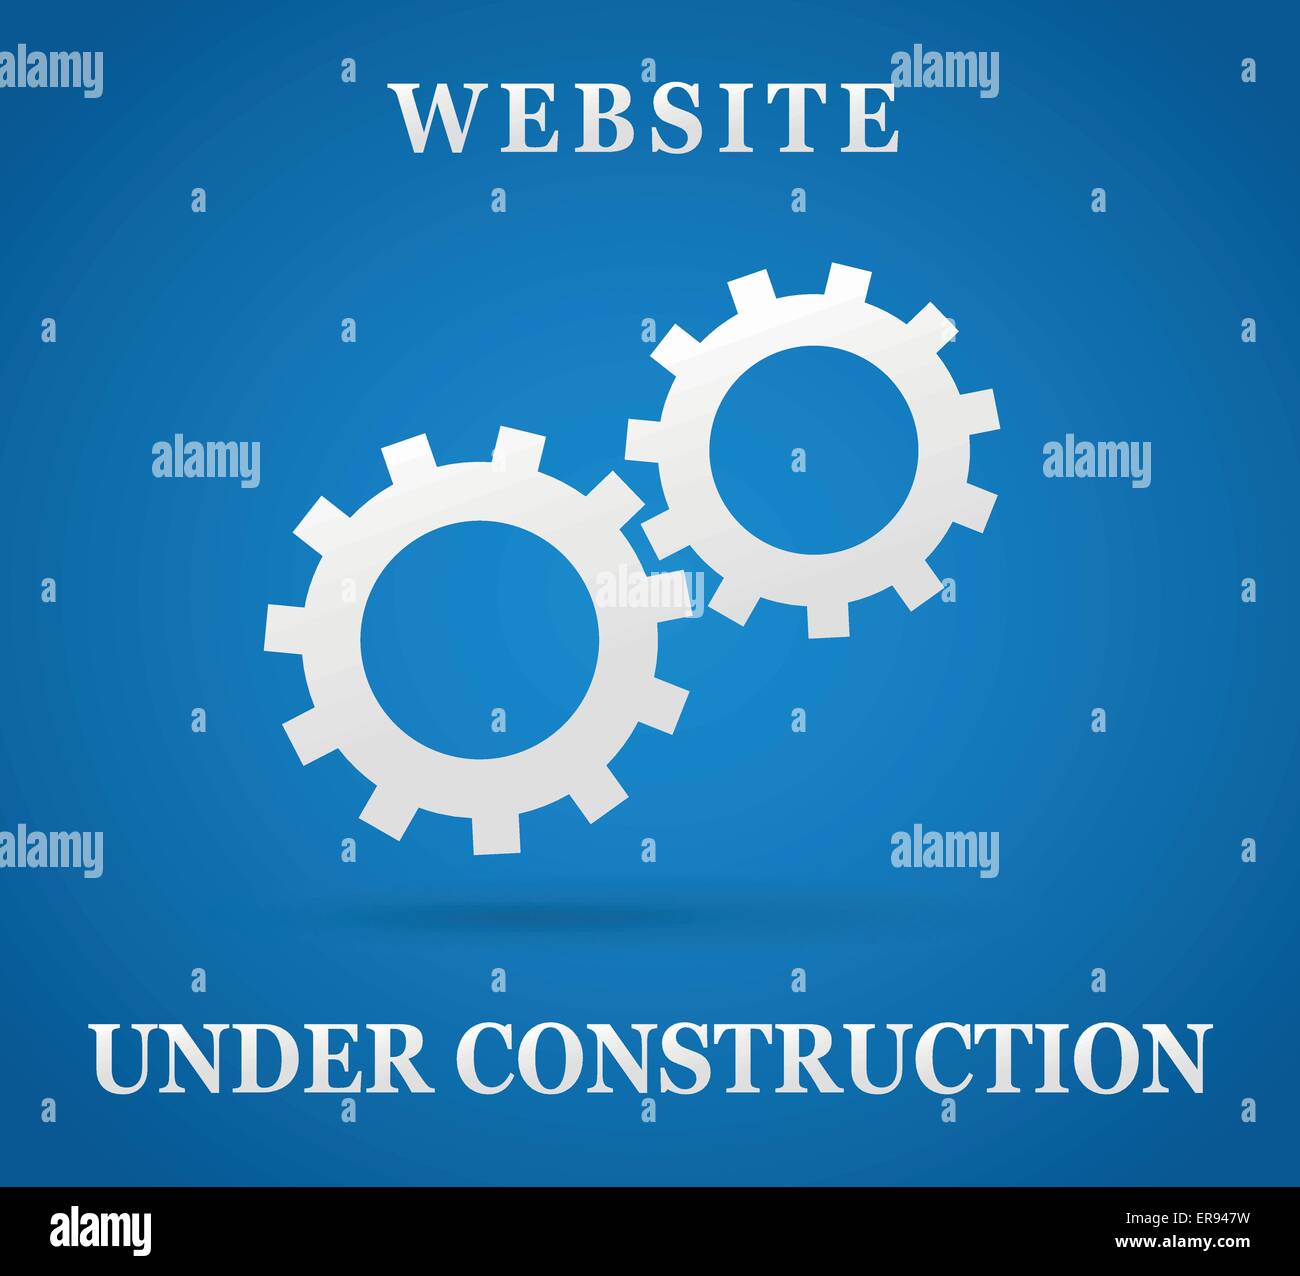 Vector illustration of website under construction on blue background Stock Vector